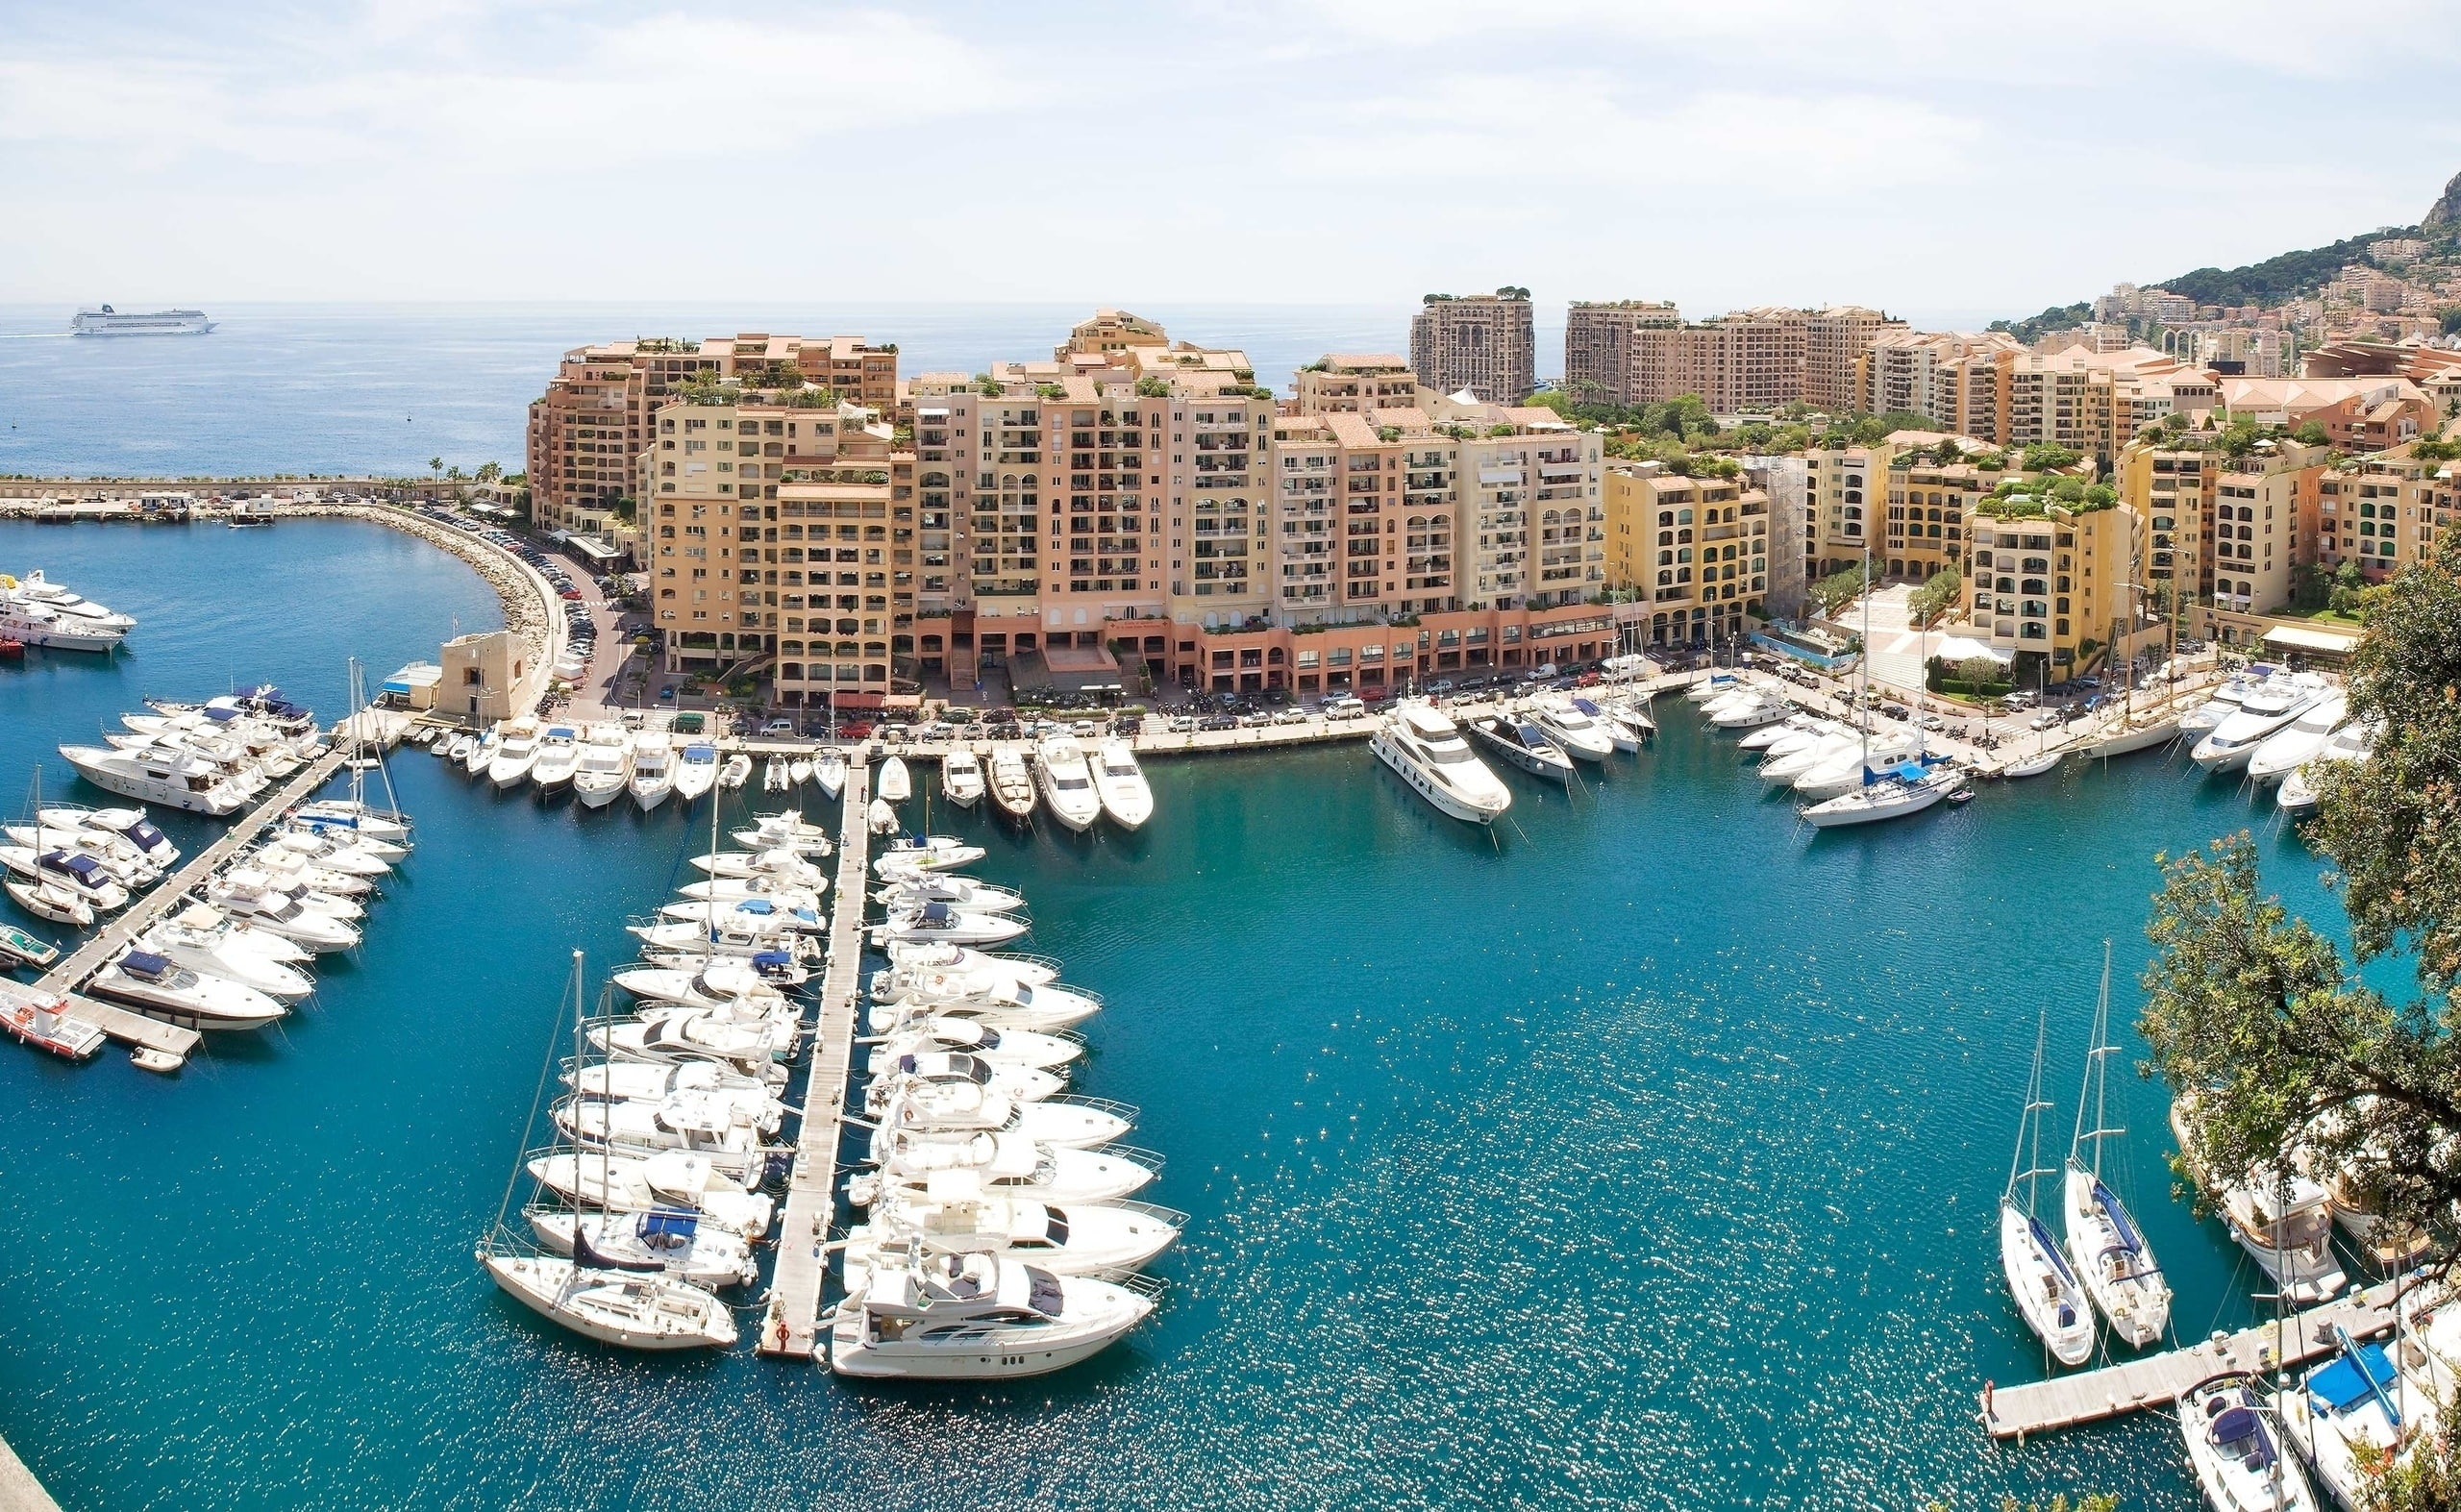 Monte Carlo Harbour, Monaco, assorted-color high-rise concrete buildings